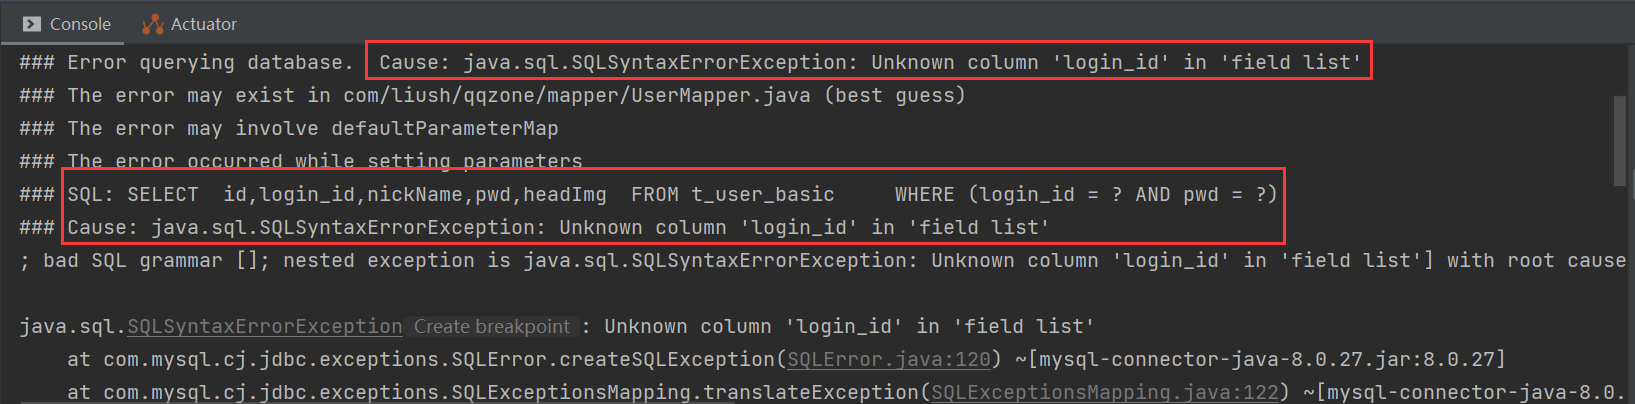 Cause: java.sql.SQLSyntaxErrorException: Unknown column ‘***_id‘ in ‘field list‘